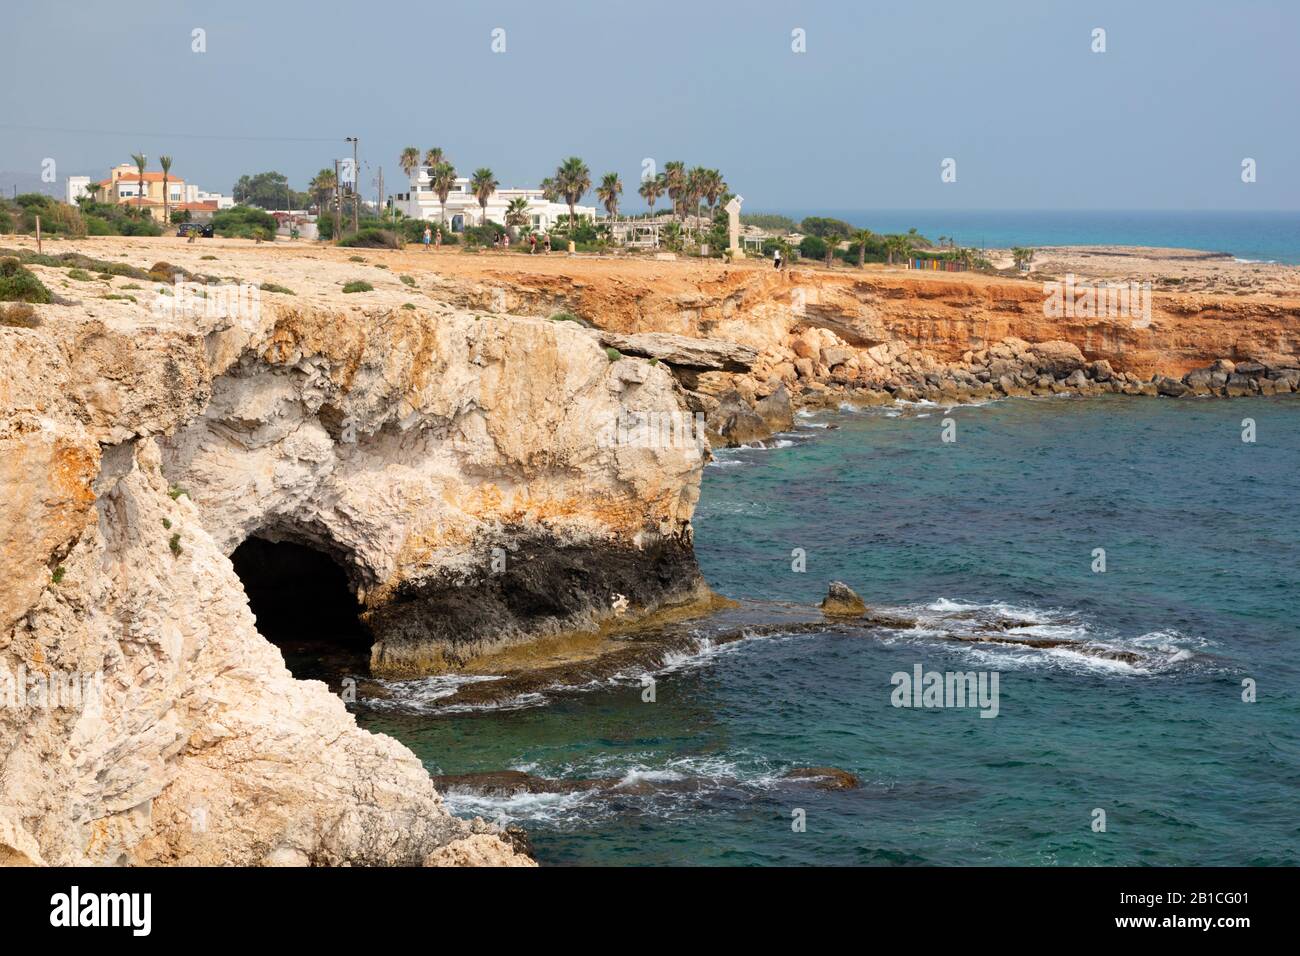 Grotte marine al Love Bridge, Ayia Napa, Cipro. 2019 Foto Stock